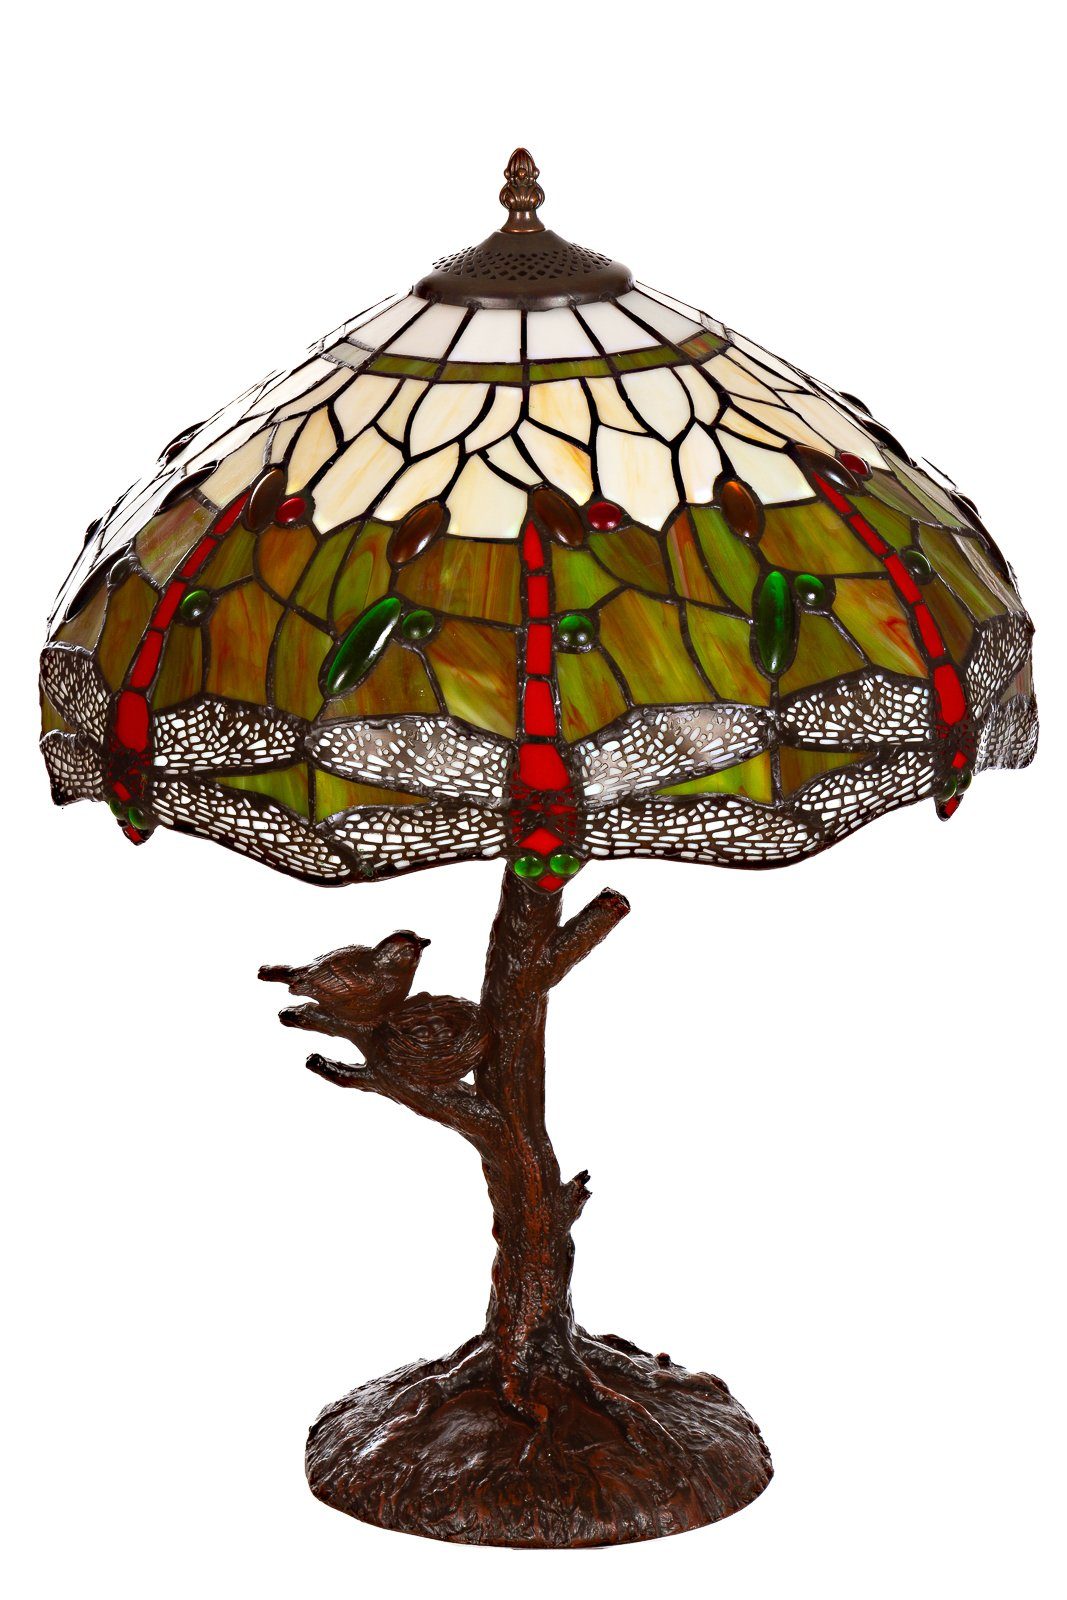 BIRENDY Stehlampe Lampe im TiffanyStil 16 Zoll Libelle Tiere Rose Tischlampe